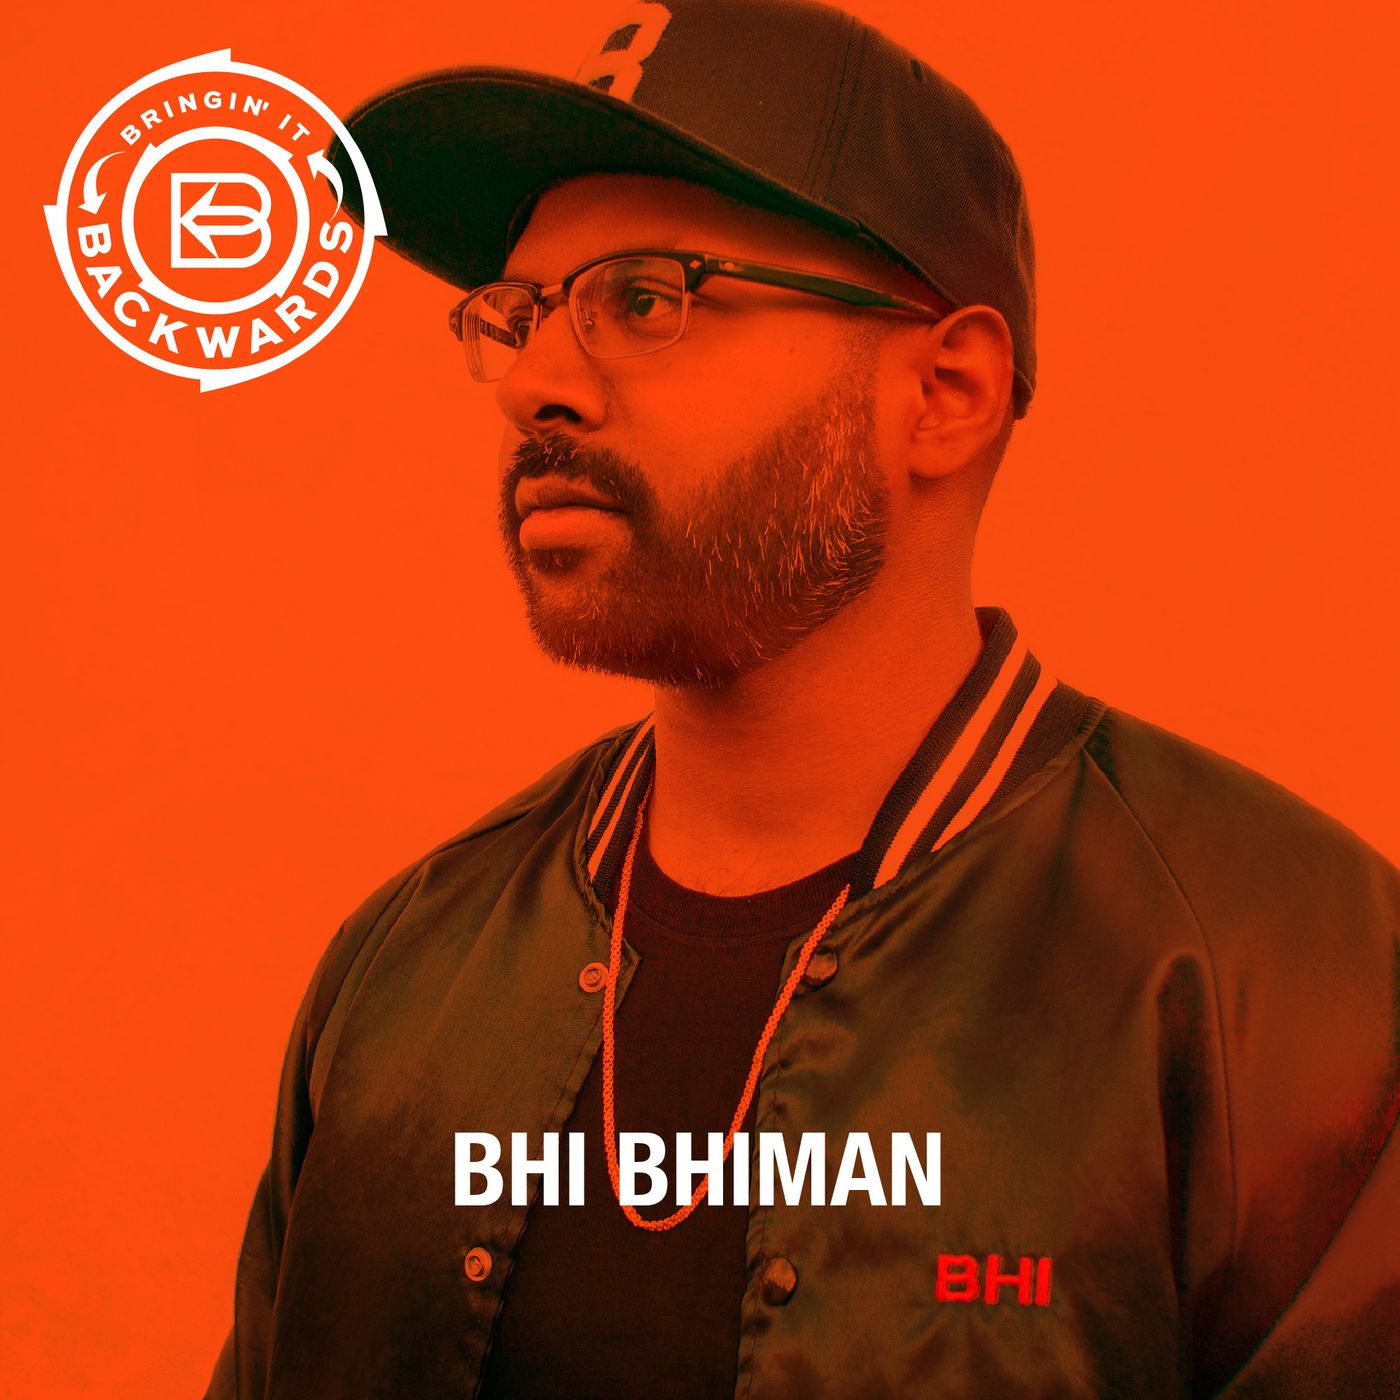 Interview with Bhi Bhiman Image